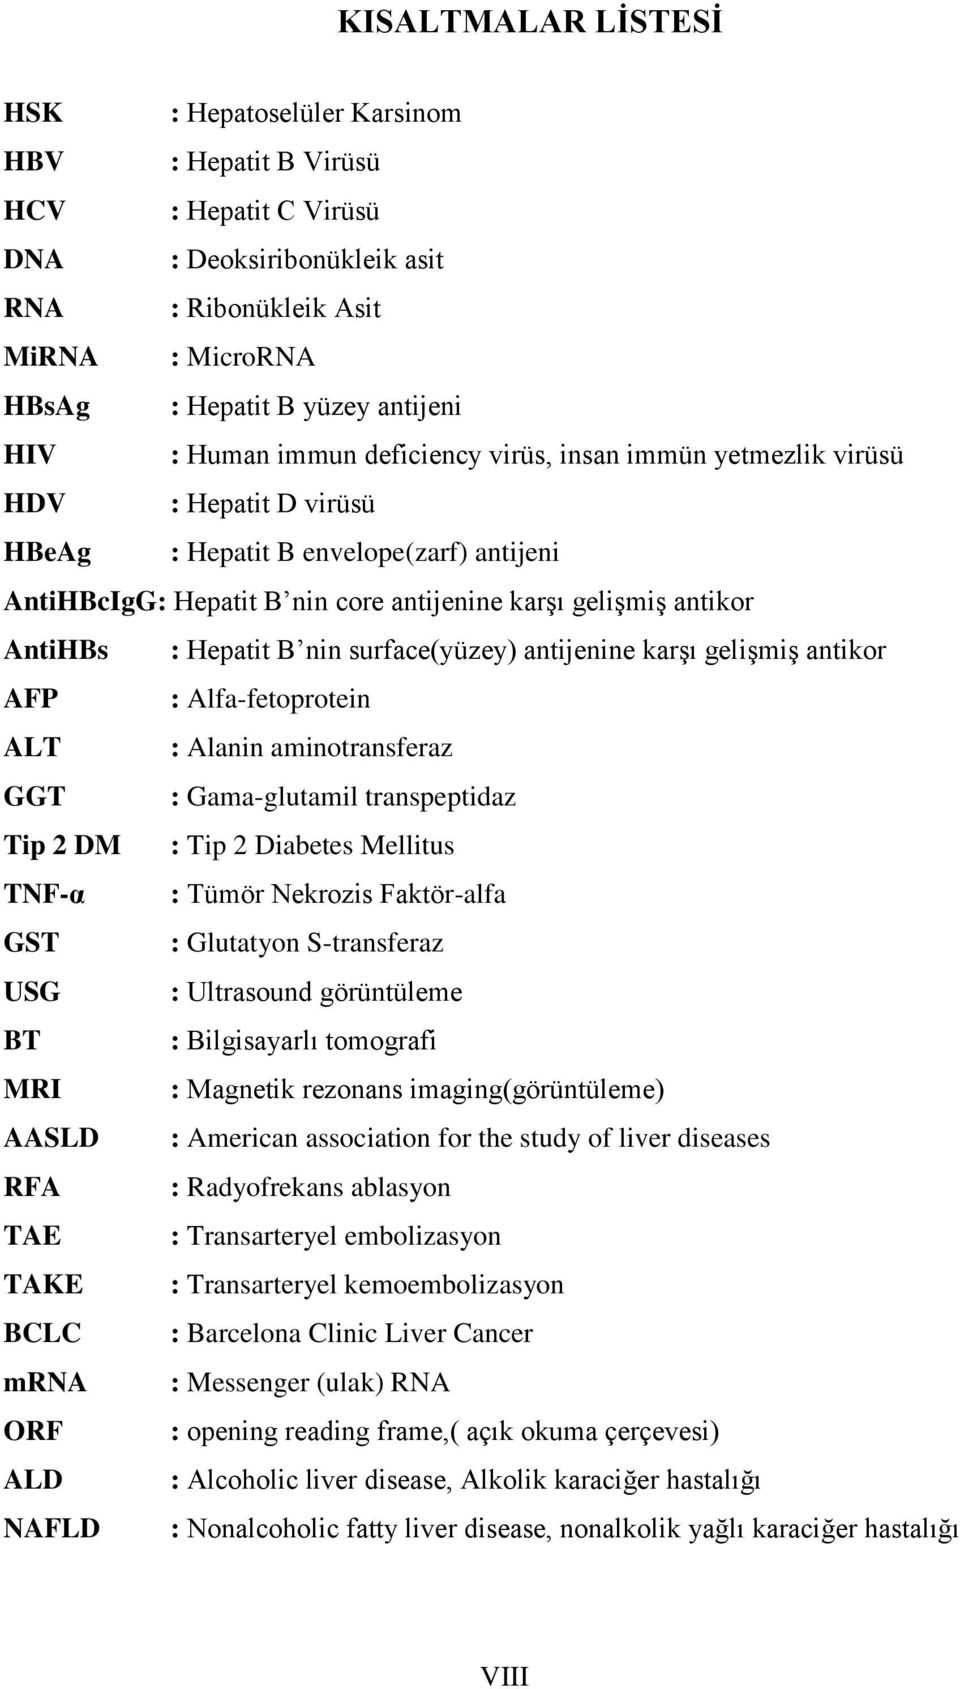 AntiHBs : Hepatit B nin surface(yüzey) antijenine karşı gelişmiş antikor AFP : Alfa-fetoprotein ALT : Alanin aminotransferaz GGT : Gama-glutamil transpeptidaz Tip 2 DM : Tip 2 Diabetes Mellitus TNF-α